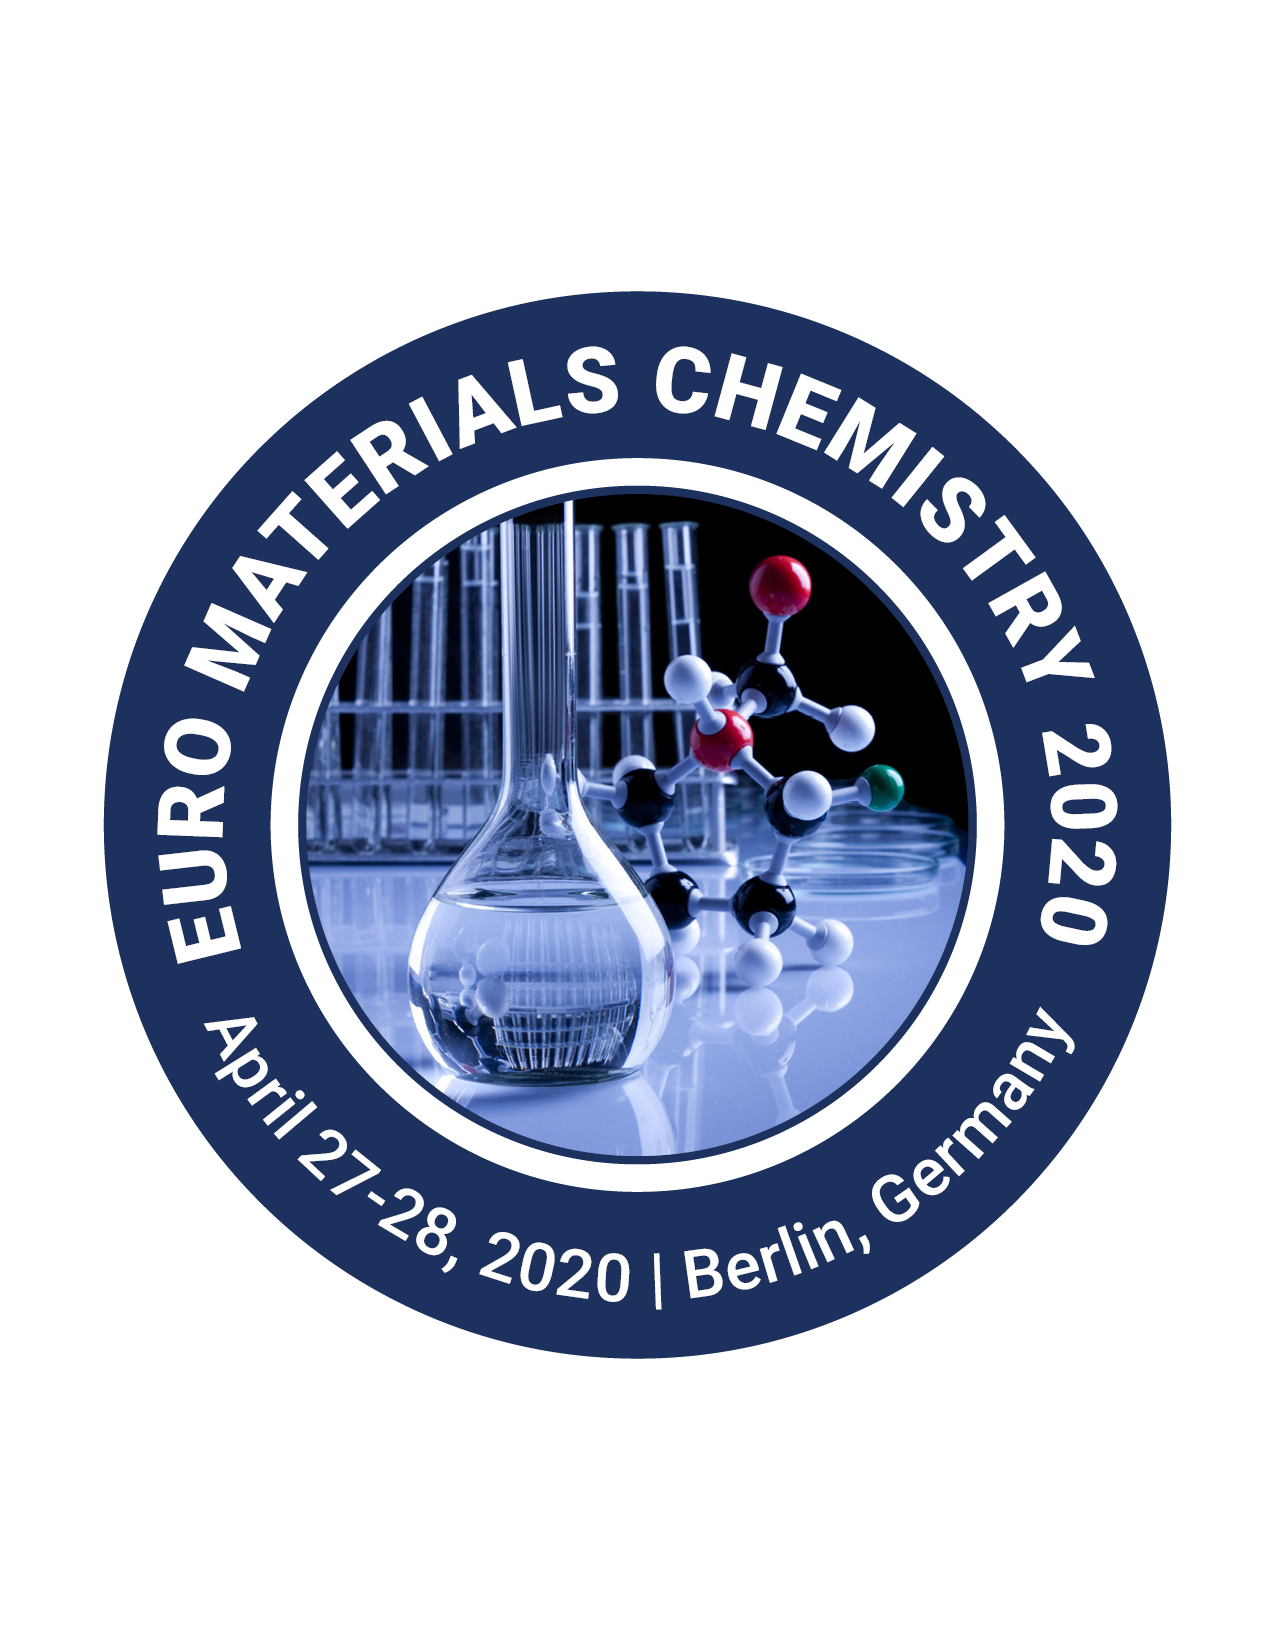 Materials Chemistry Conferences, Berlin, Brandenburg, Germany